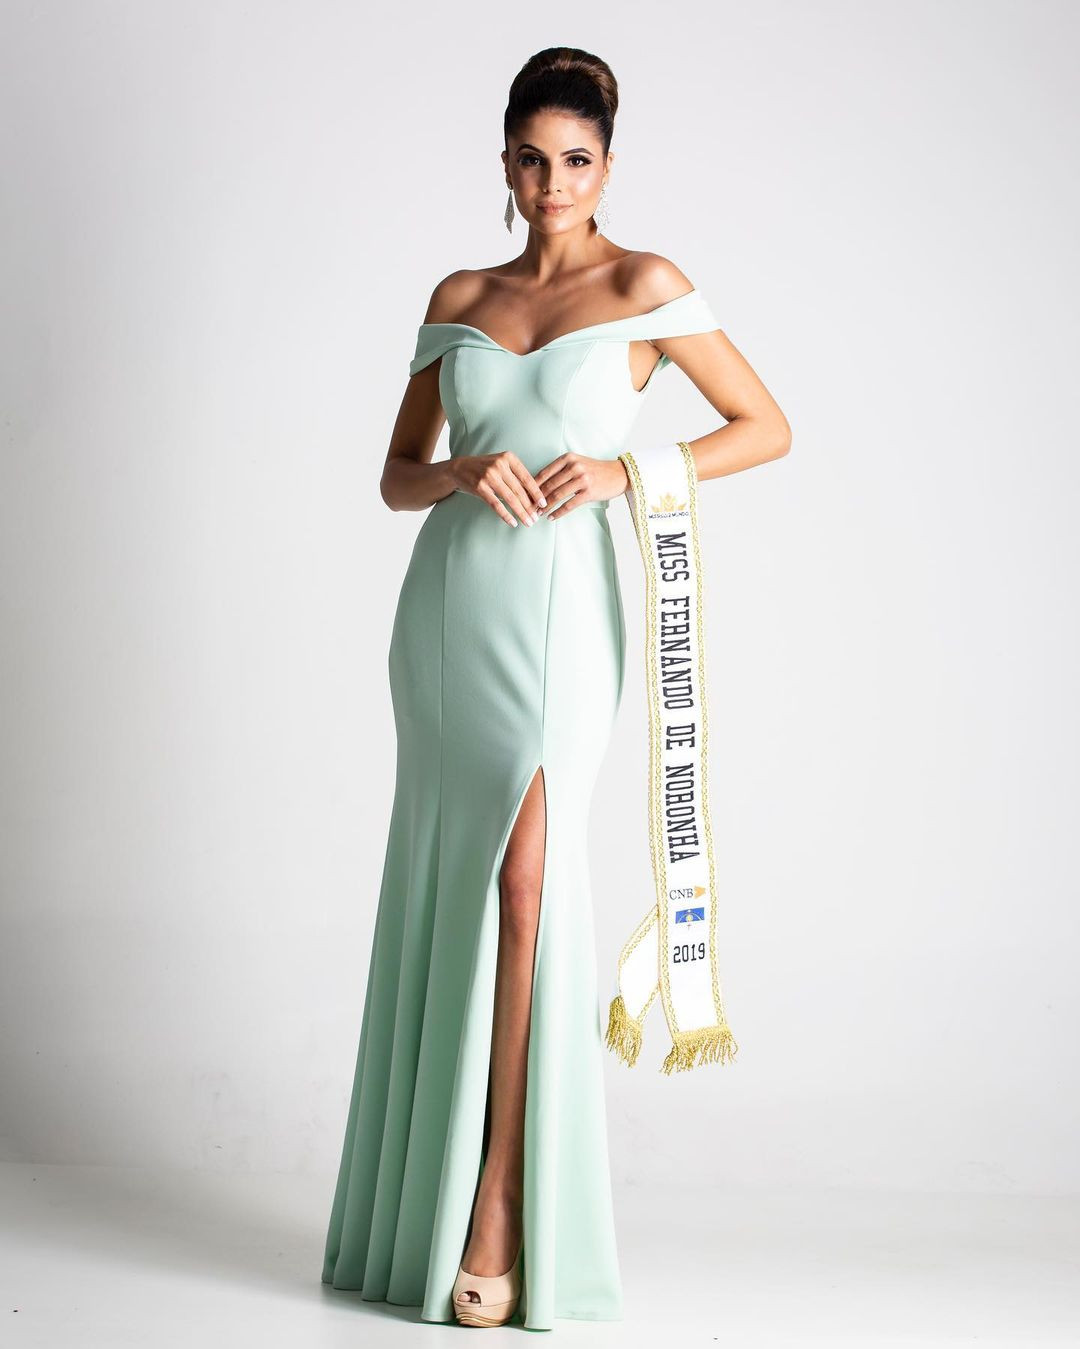 iully thaisa, top 5 de miss brasil mundo 2019. - Página 5 Fymdue10